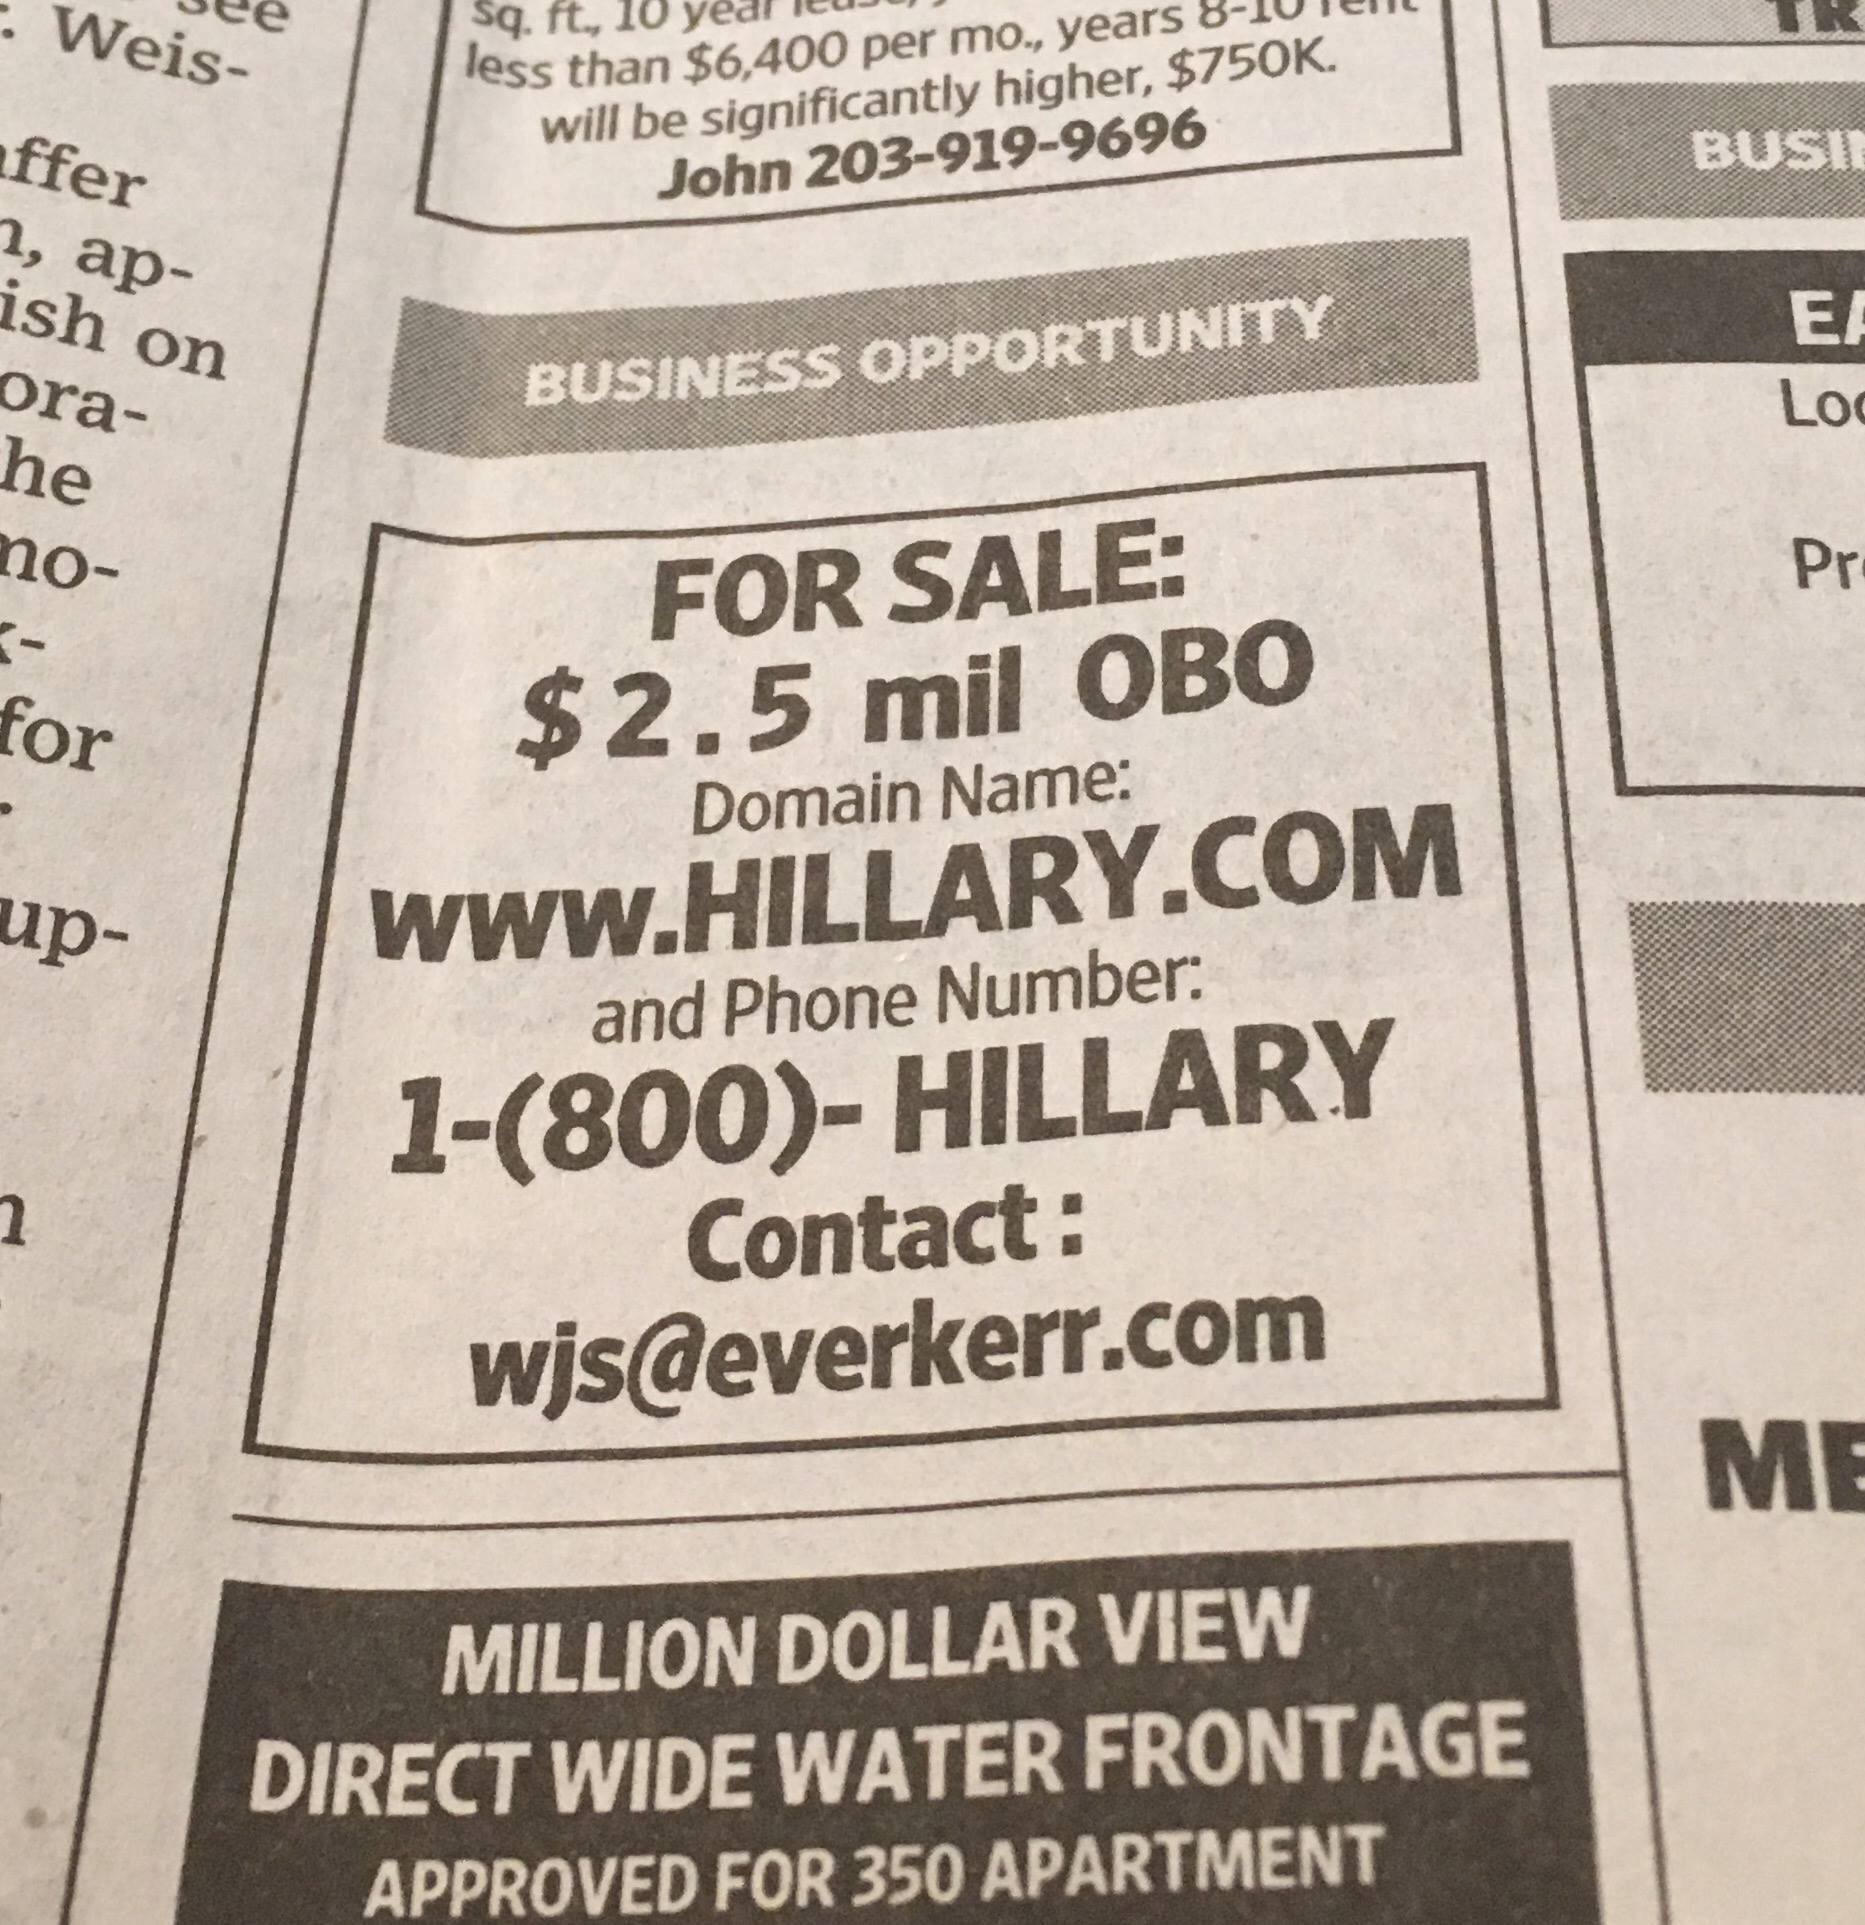 Hillary.com - For sale via a WSJ ad.